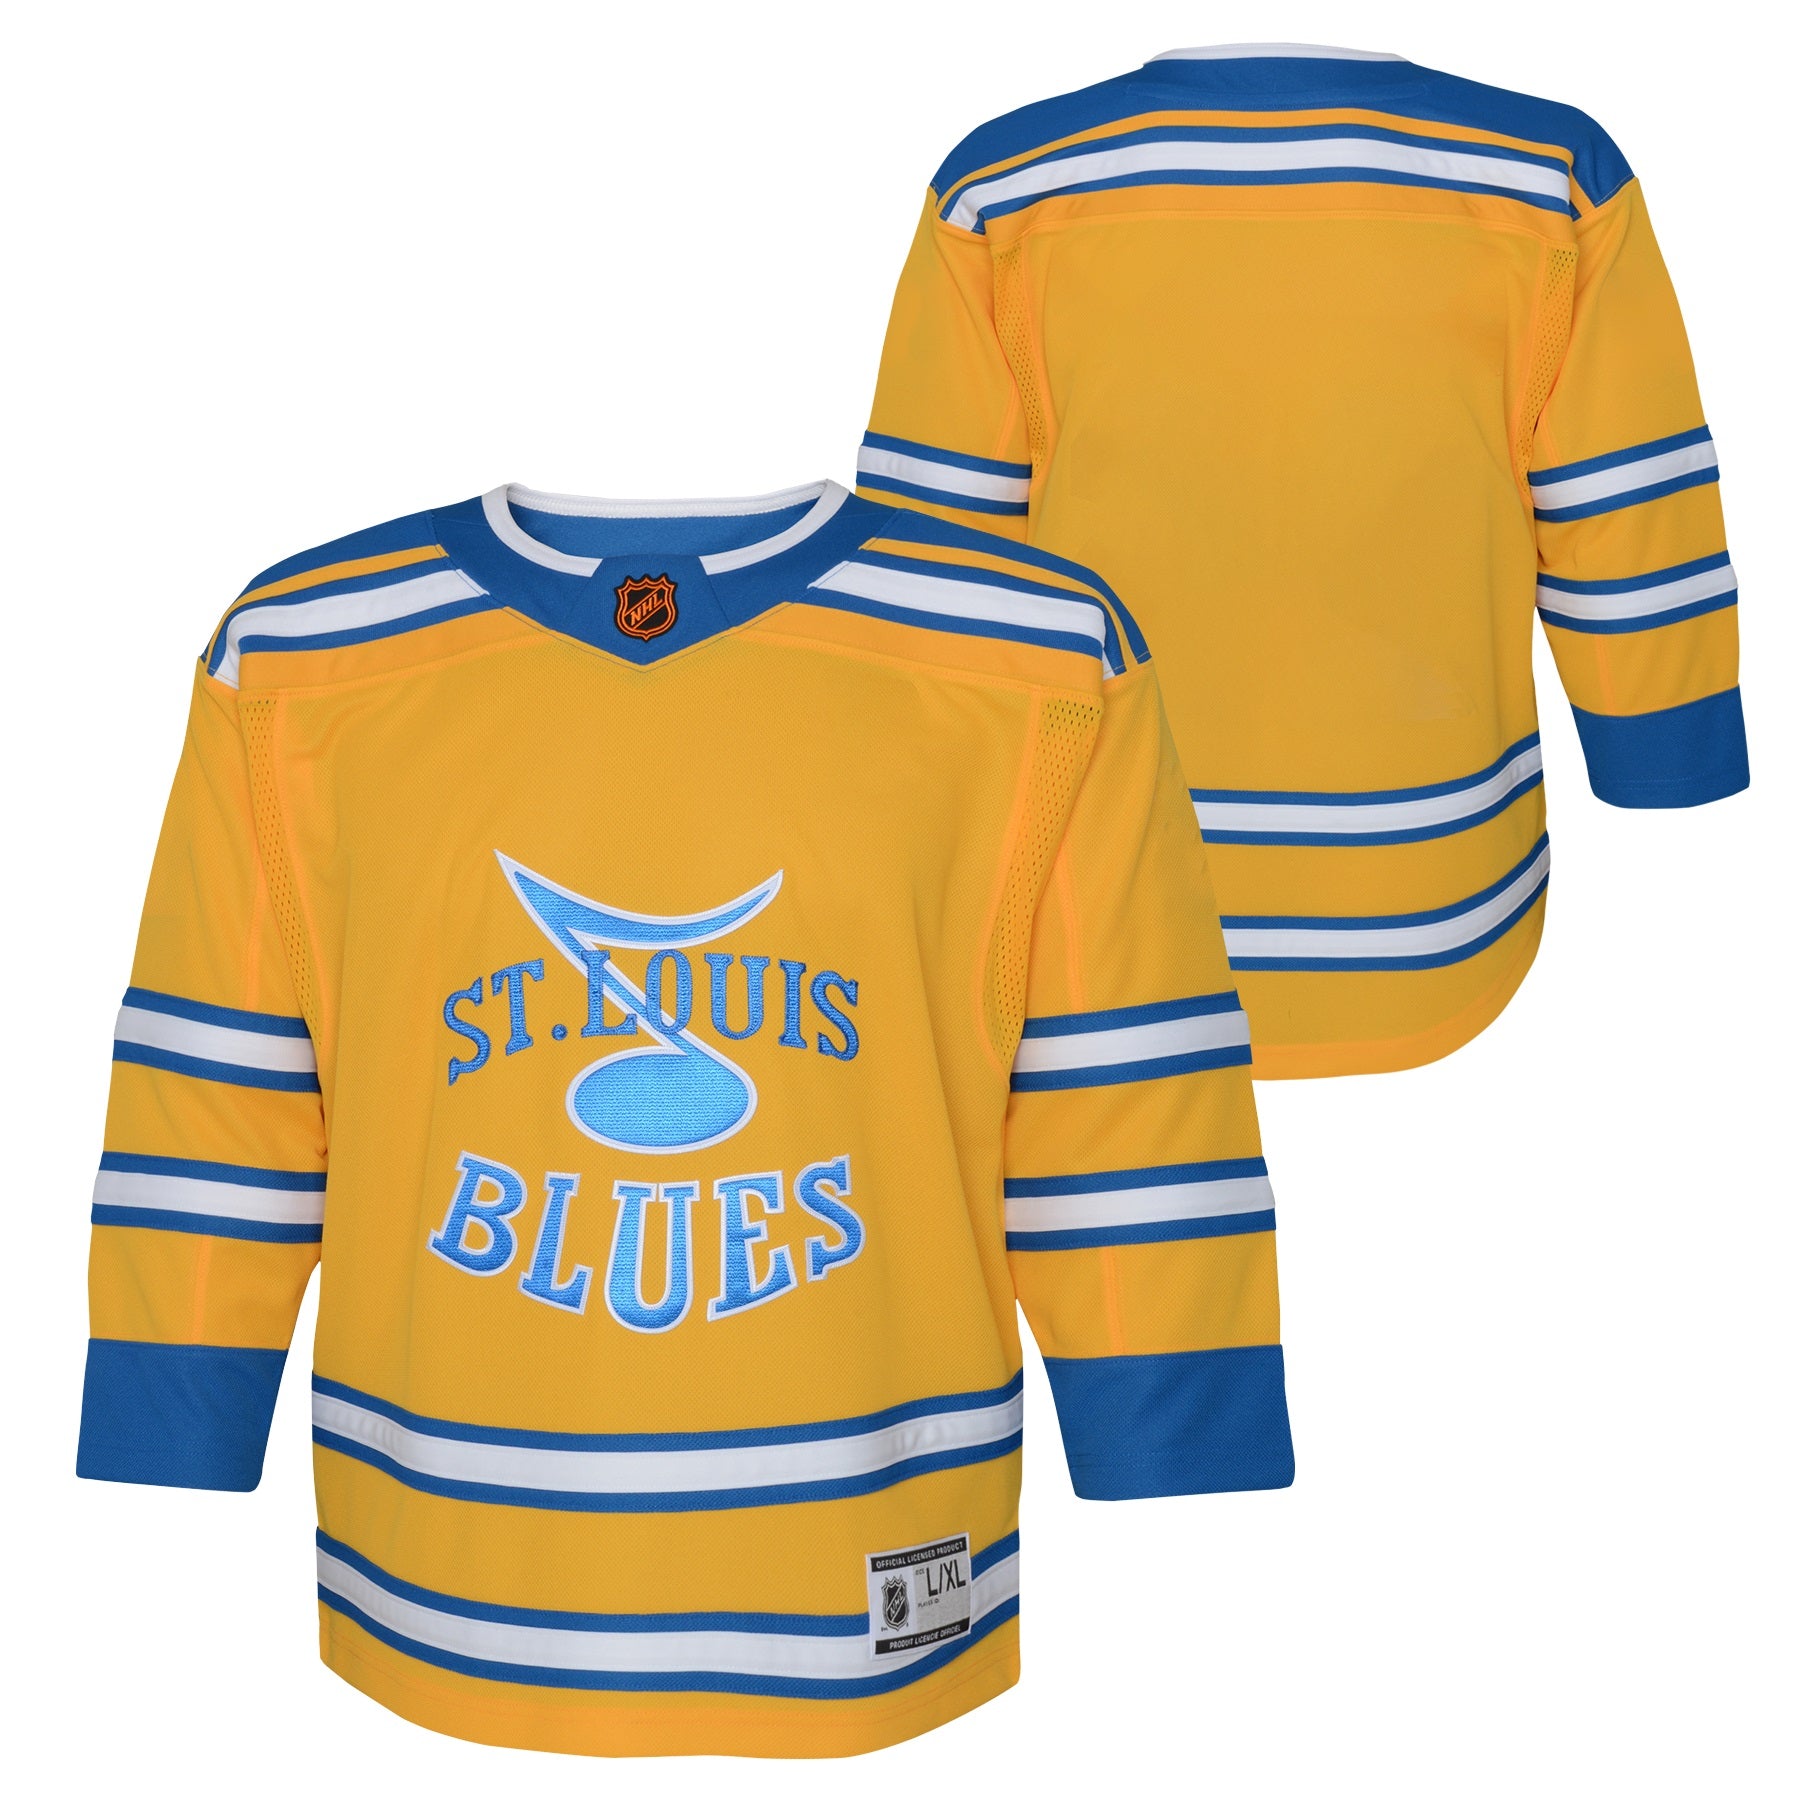 St. Louis Blues future uniform set + Reverse Retro : r/hockey